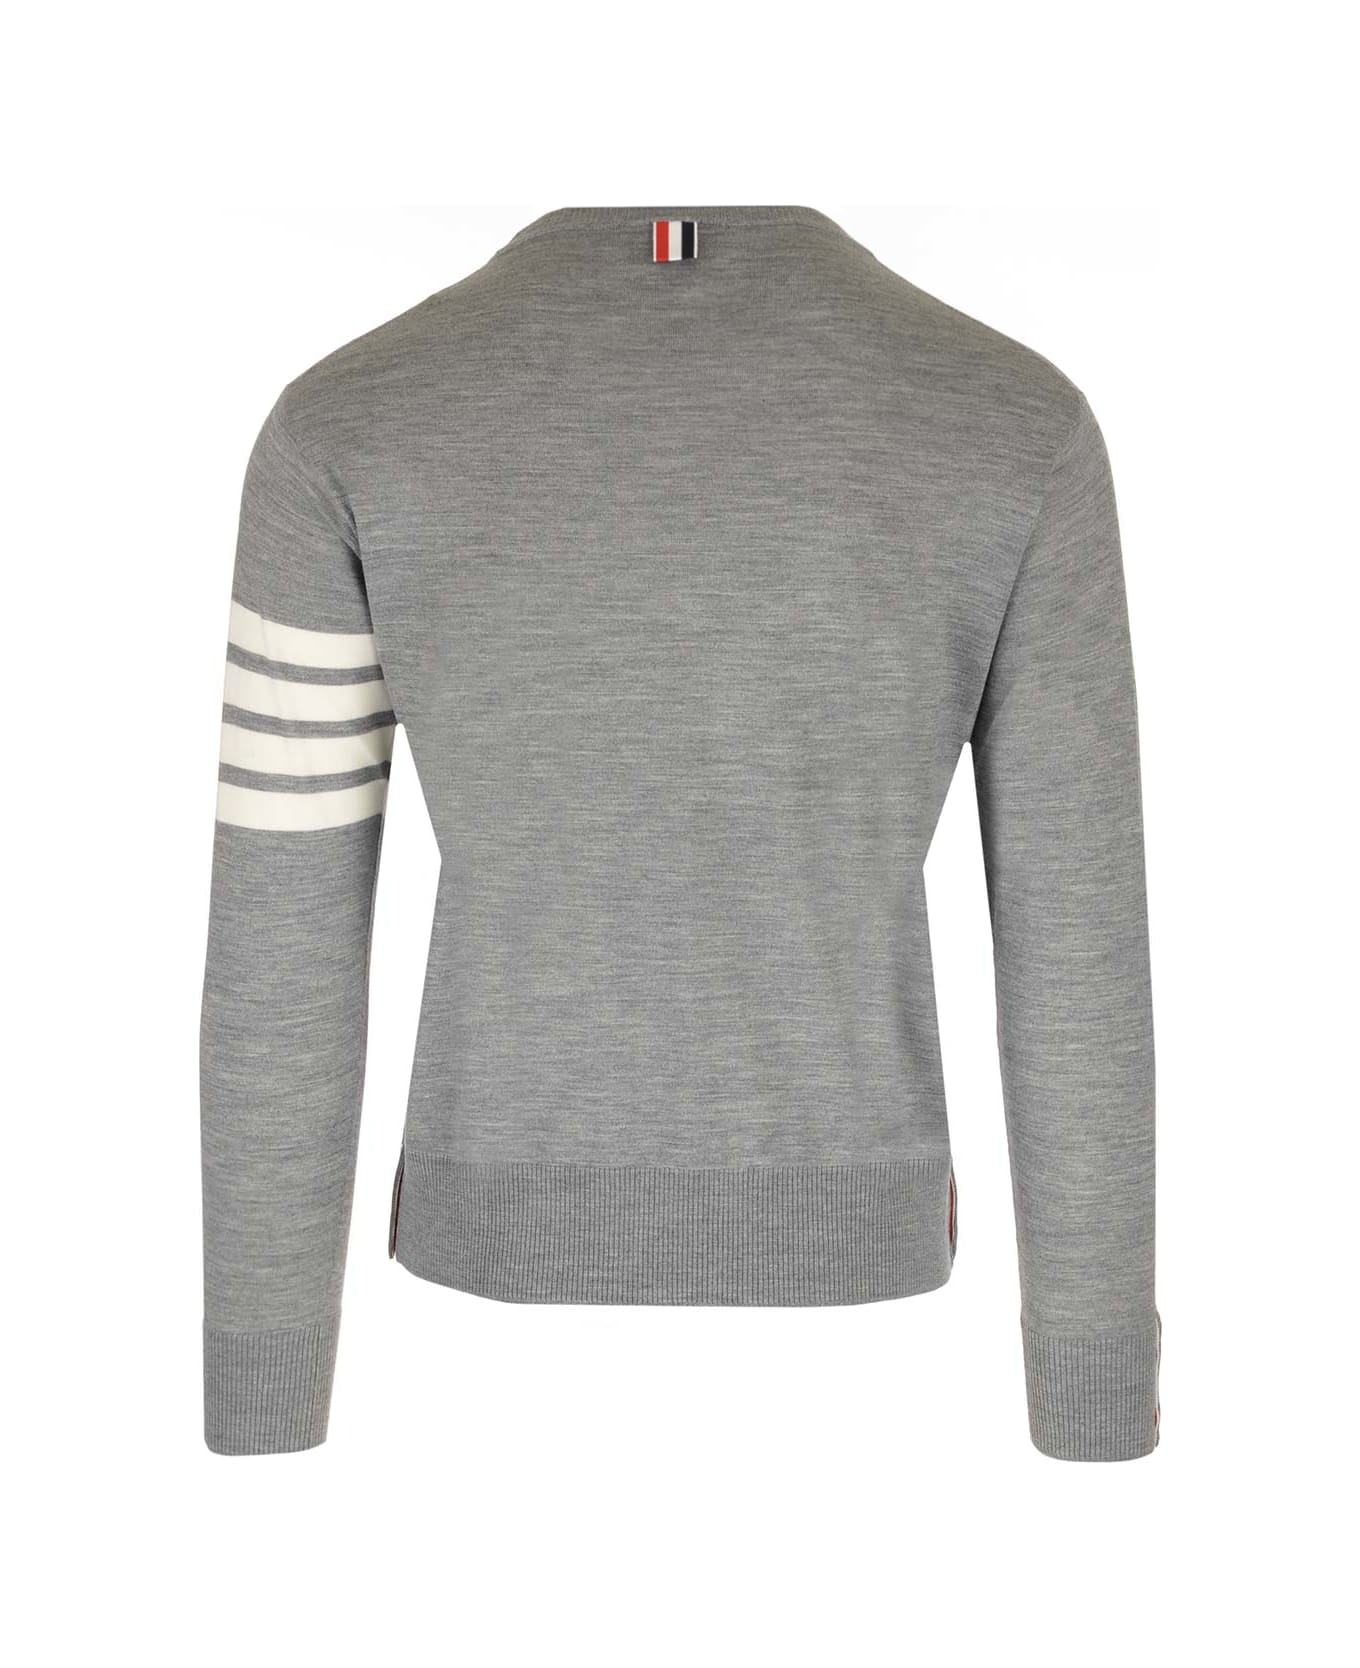 Thom Browne Grey Merino Wool Sweater - GREY